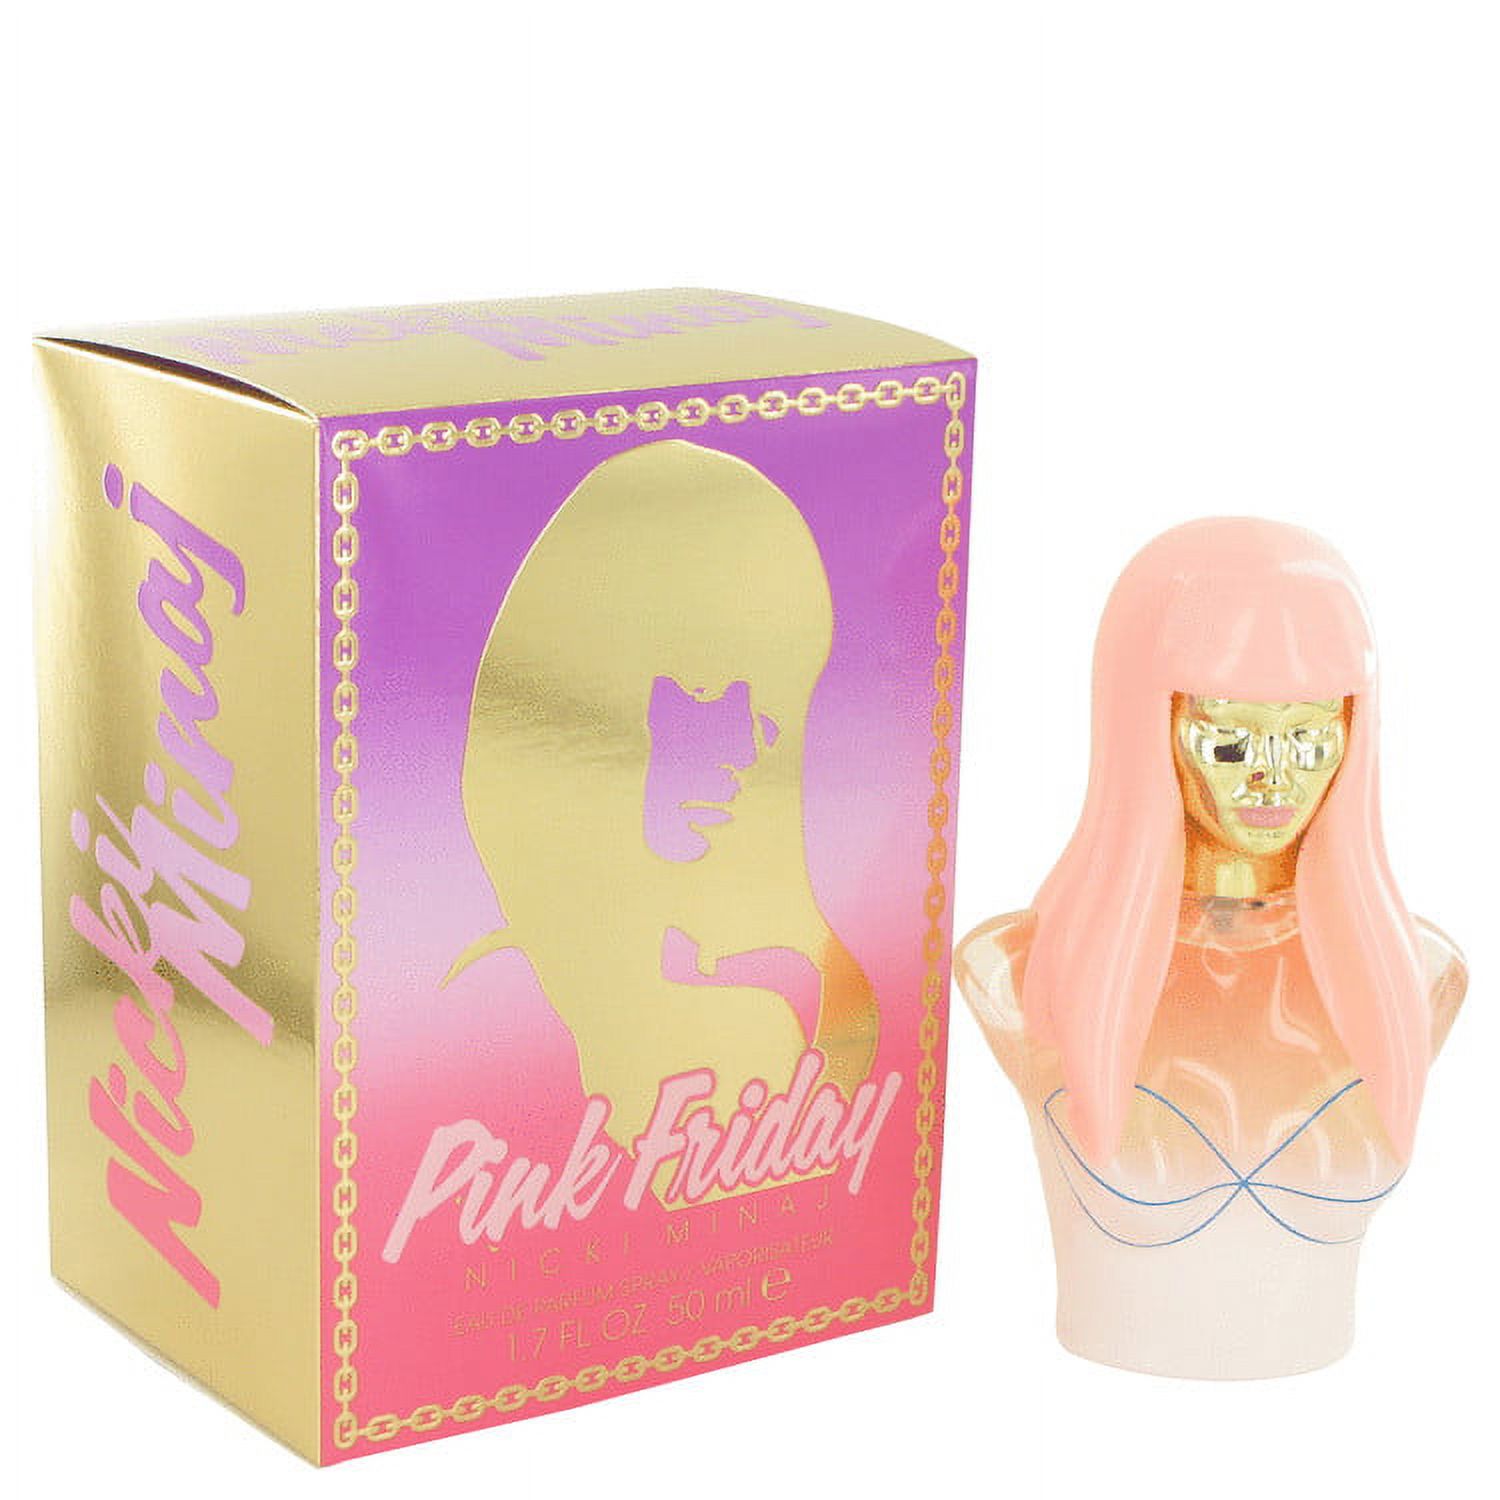 Pink Friday by Nicki Minaj Eau De Parfum Spray 1.7 oz for Women - image 2 of 2